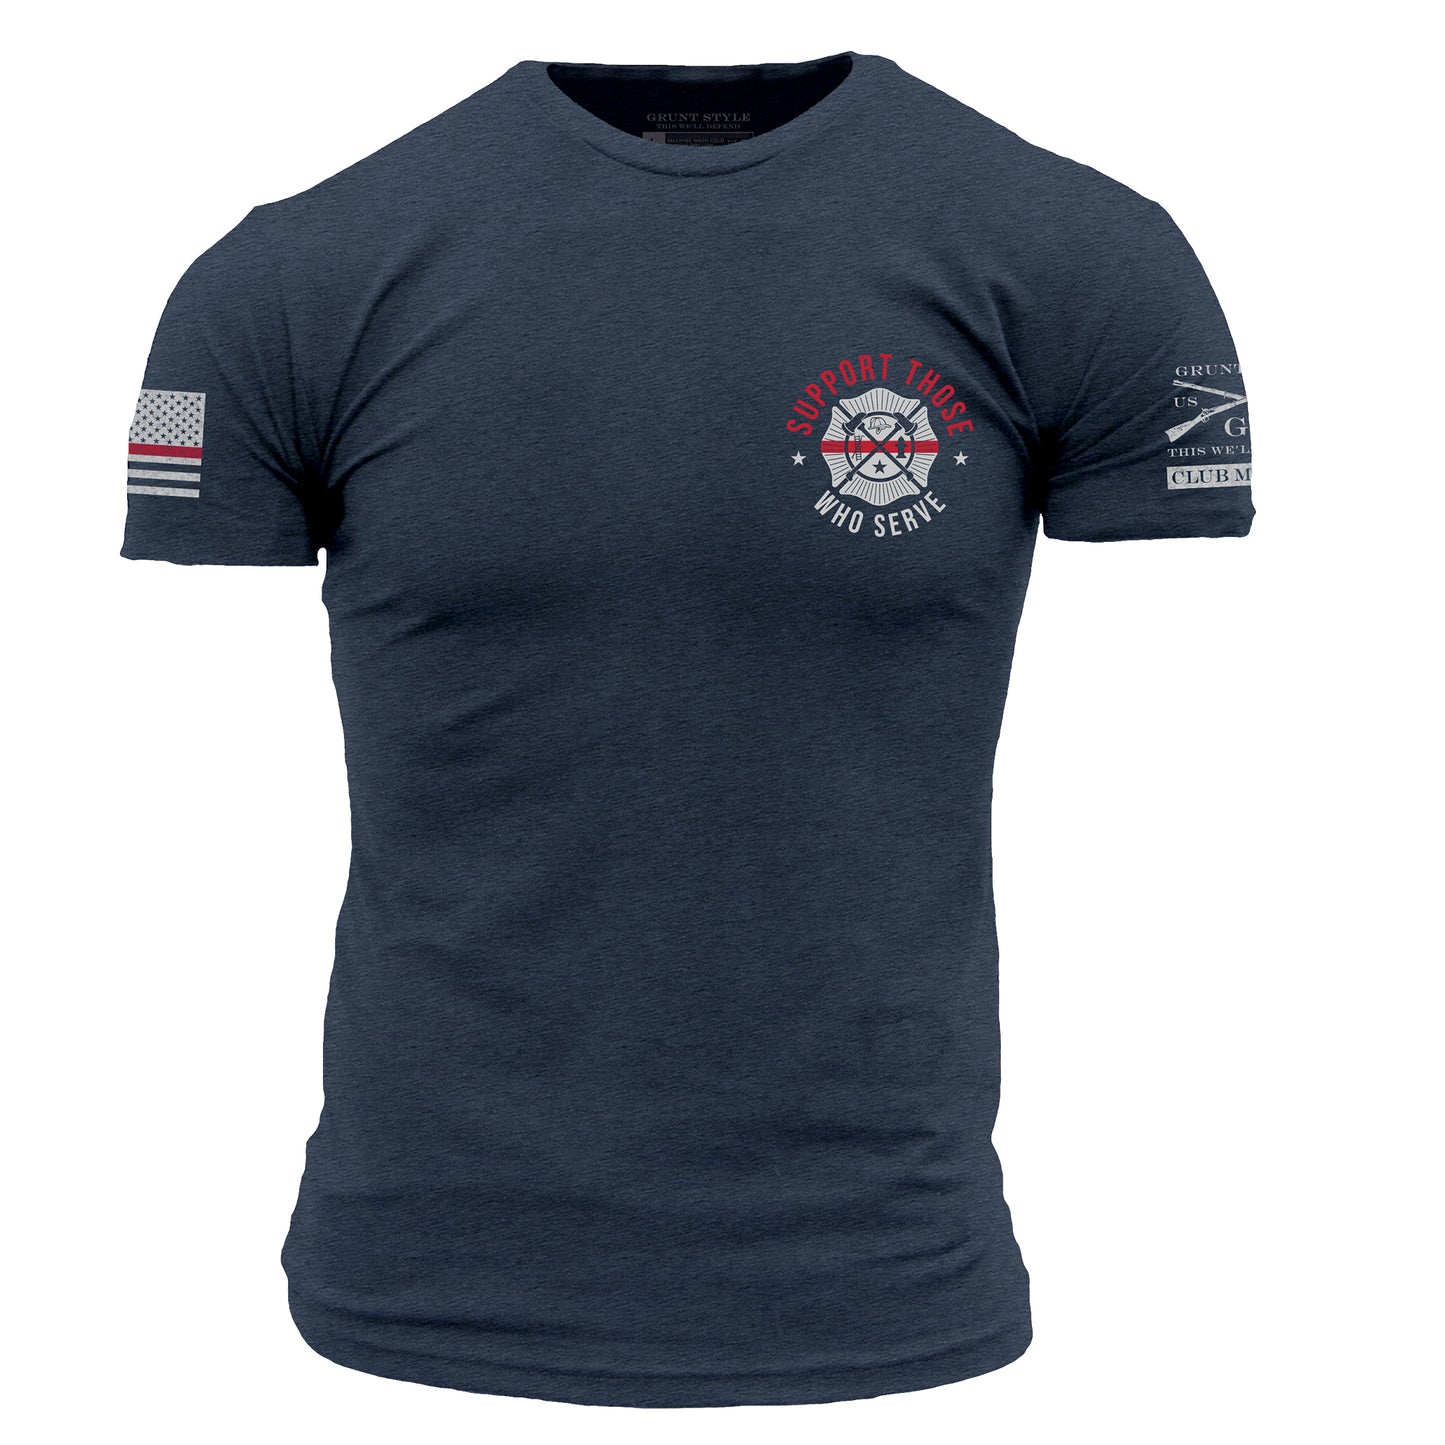 Shirt Club - firemen apparel